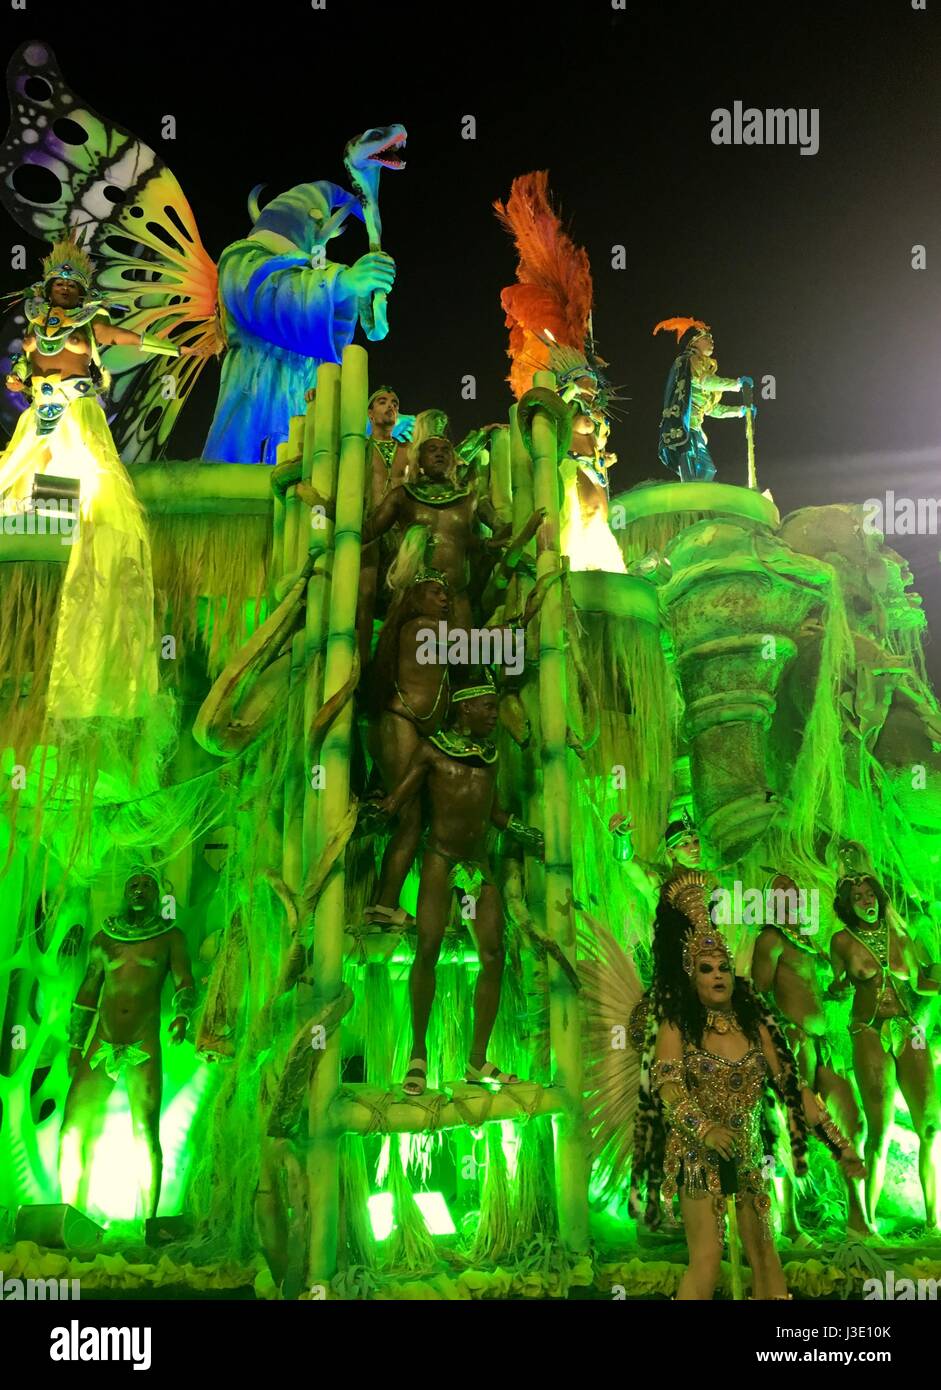 Carnaval parade in the Sambodromo, Rio de Janeiro, Brazil. What an energy, spirit, culture, and crazy party. Stock Photo